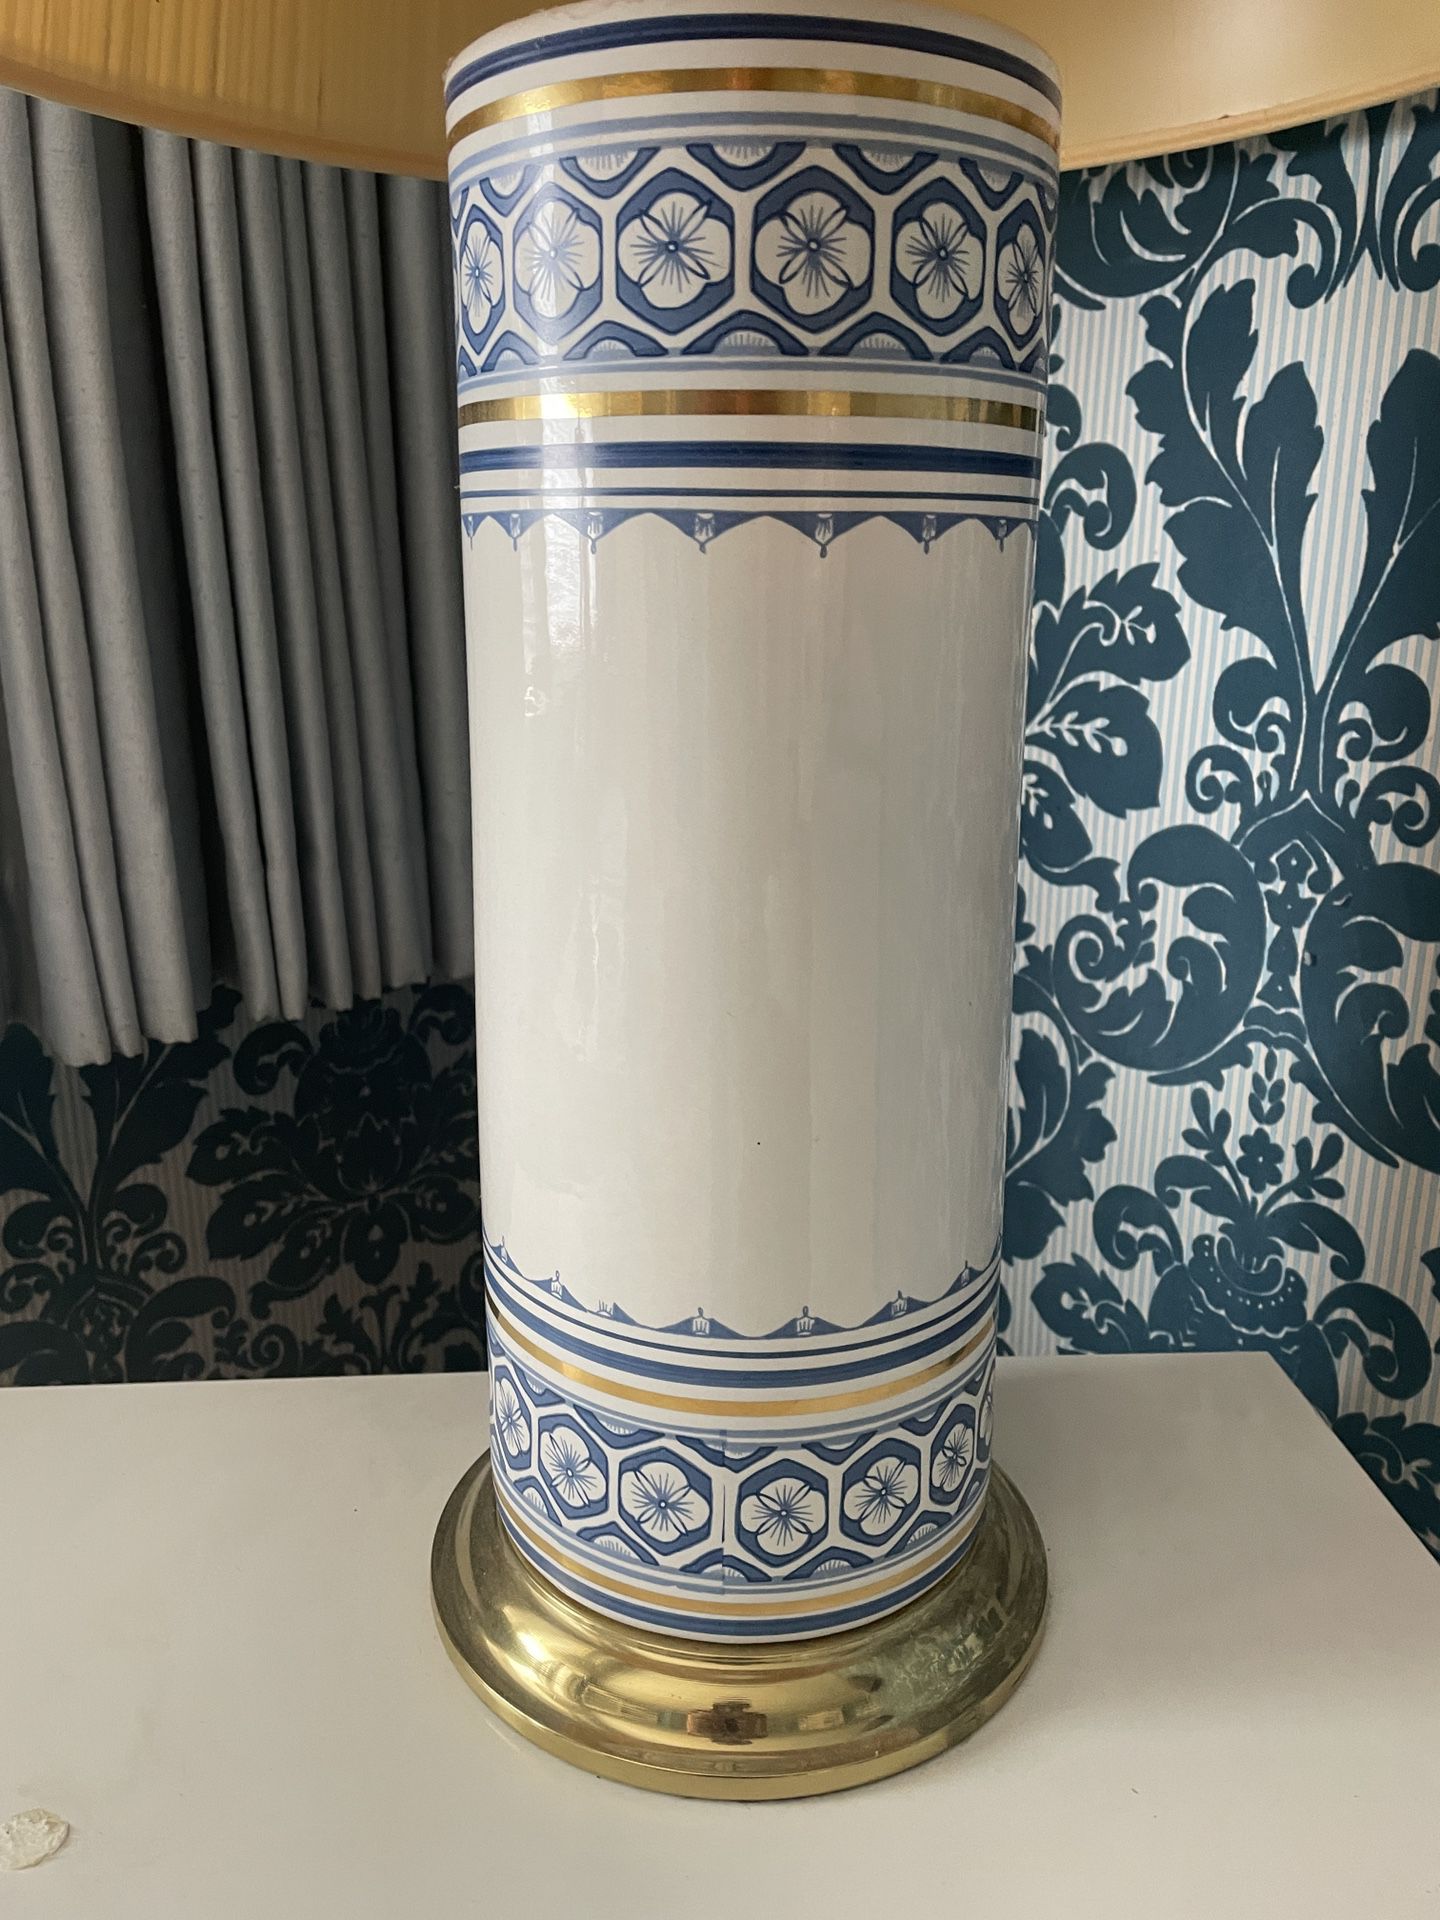 White and Blue Ceramic Lamp